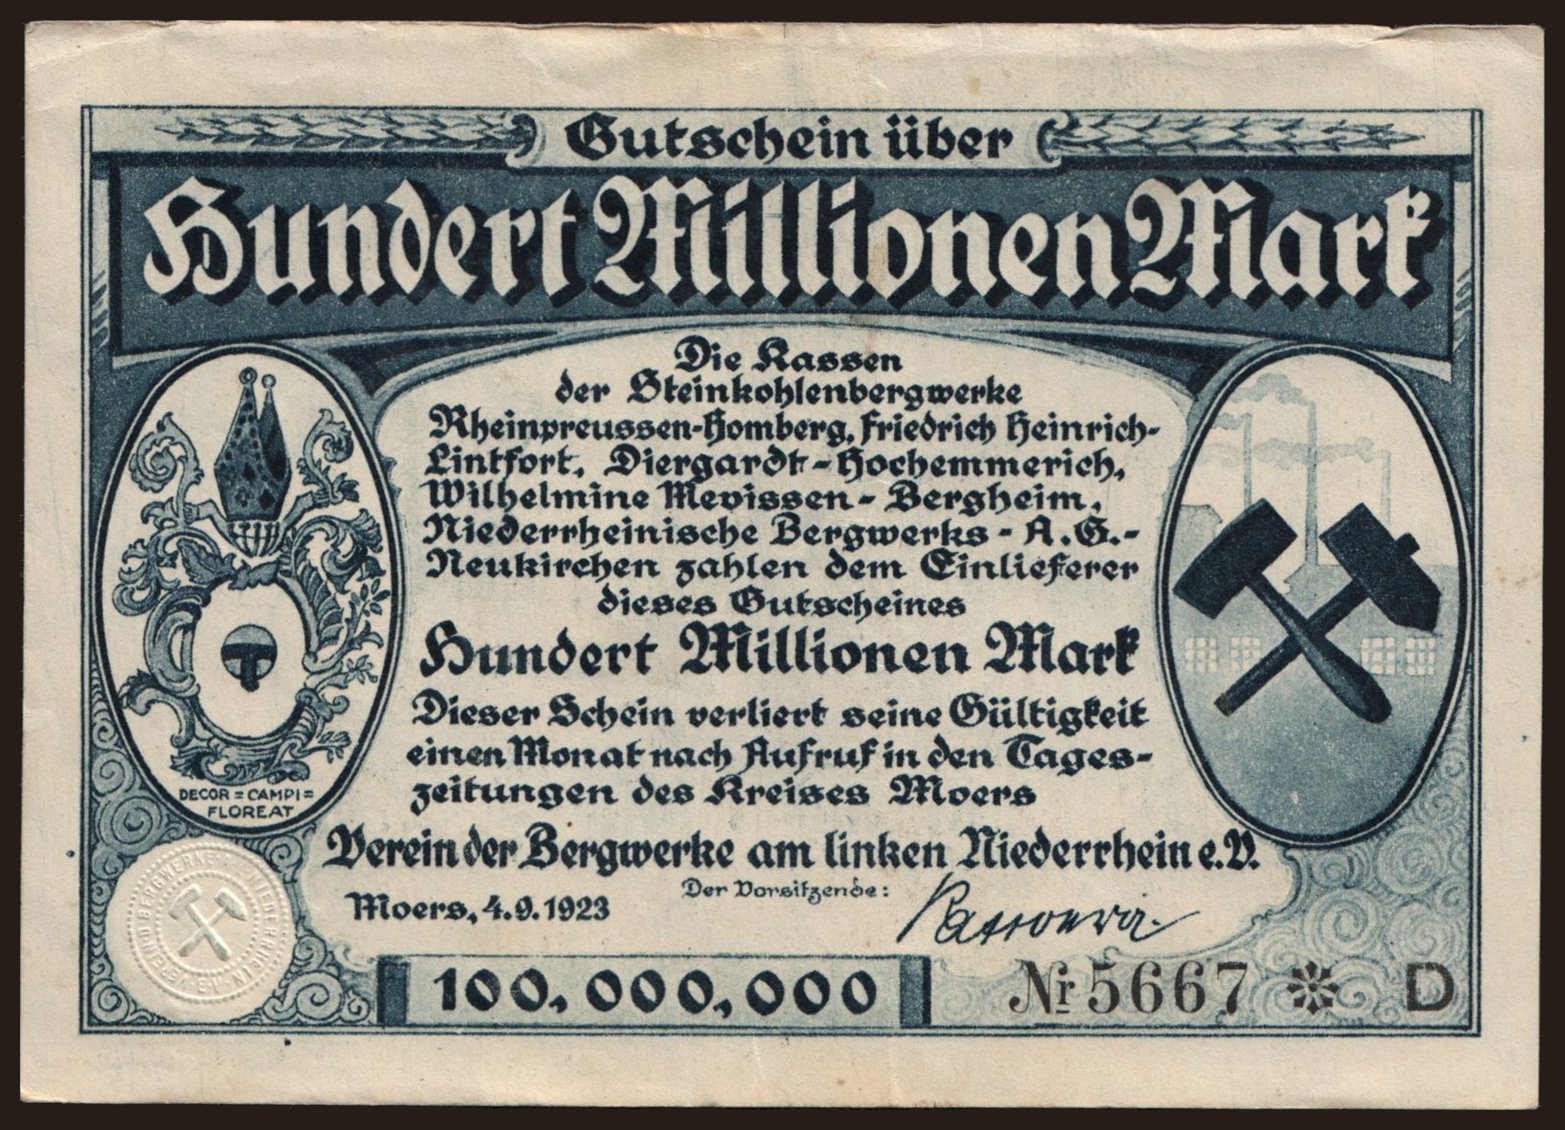 Moers/ Verein der Bergwerke am linken Niederrhein e.V., 100.000.000 Mark, 1923